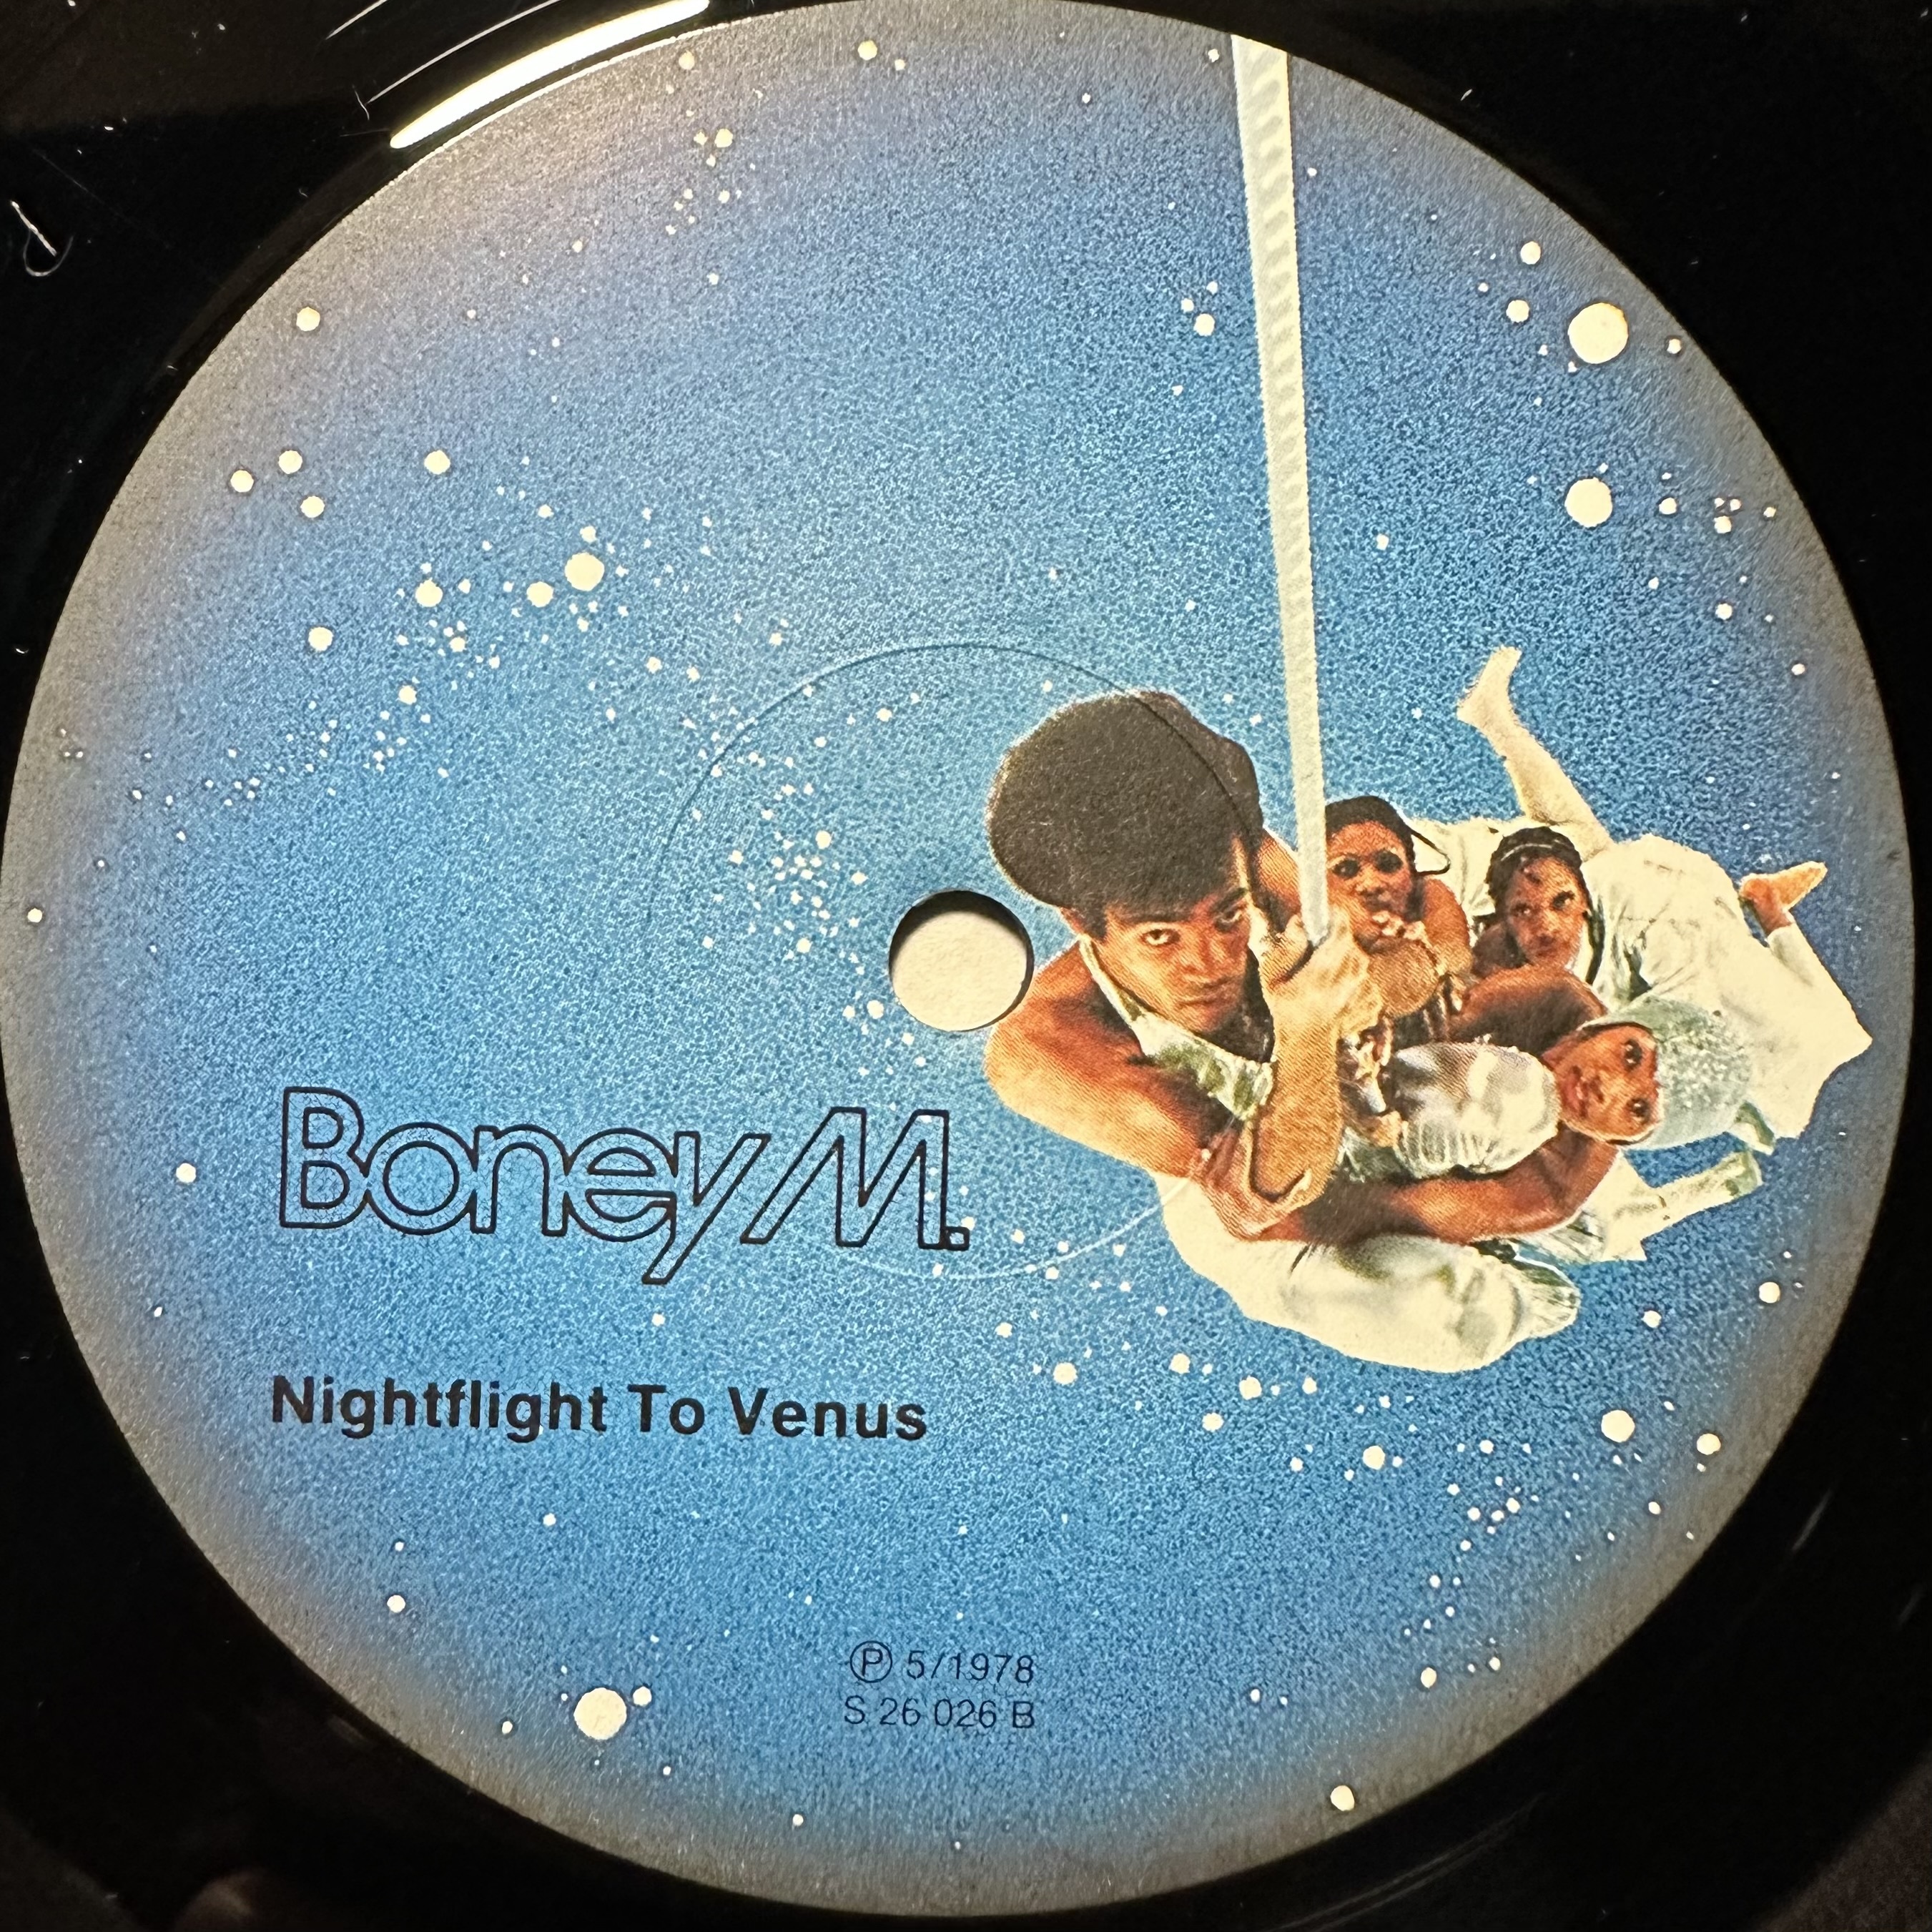 Boney m venus. 1978 - Nightflight to Venus. Boney m Nightflight to Venus 1978. Boney m Nightflight to Venus CD. Boney m Nightflight to Venus 1978 альбом.